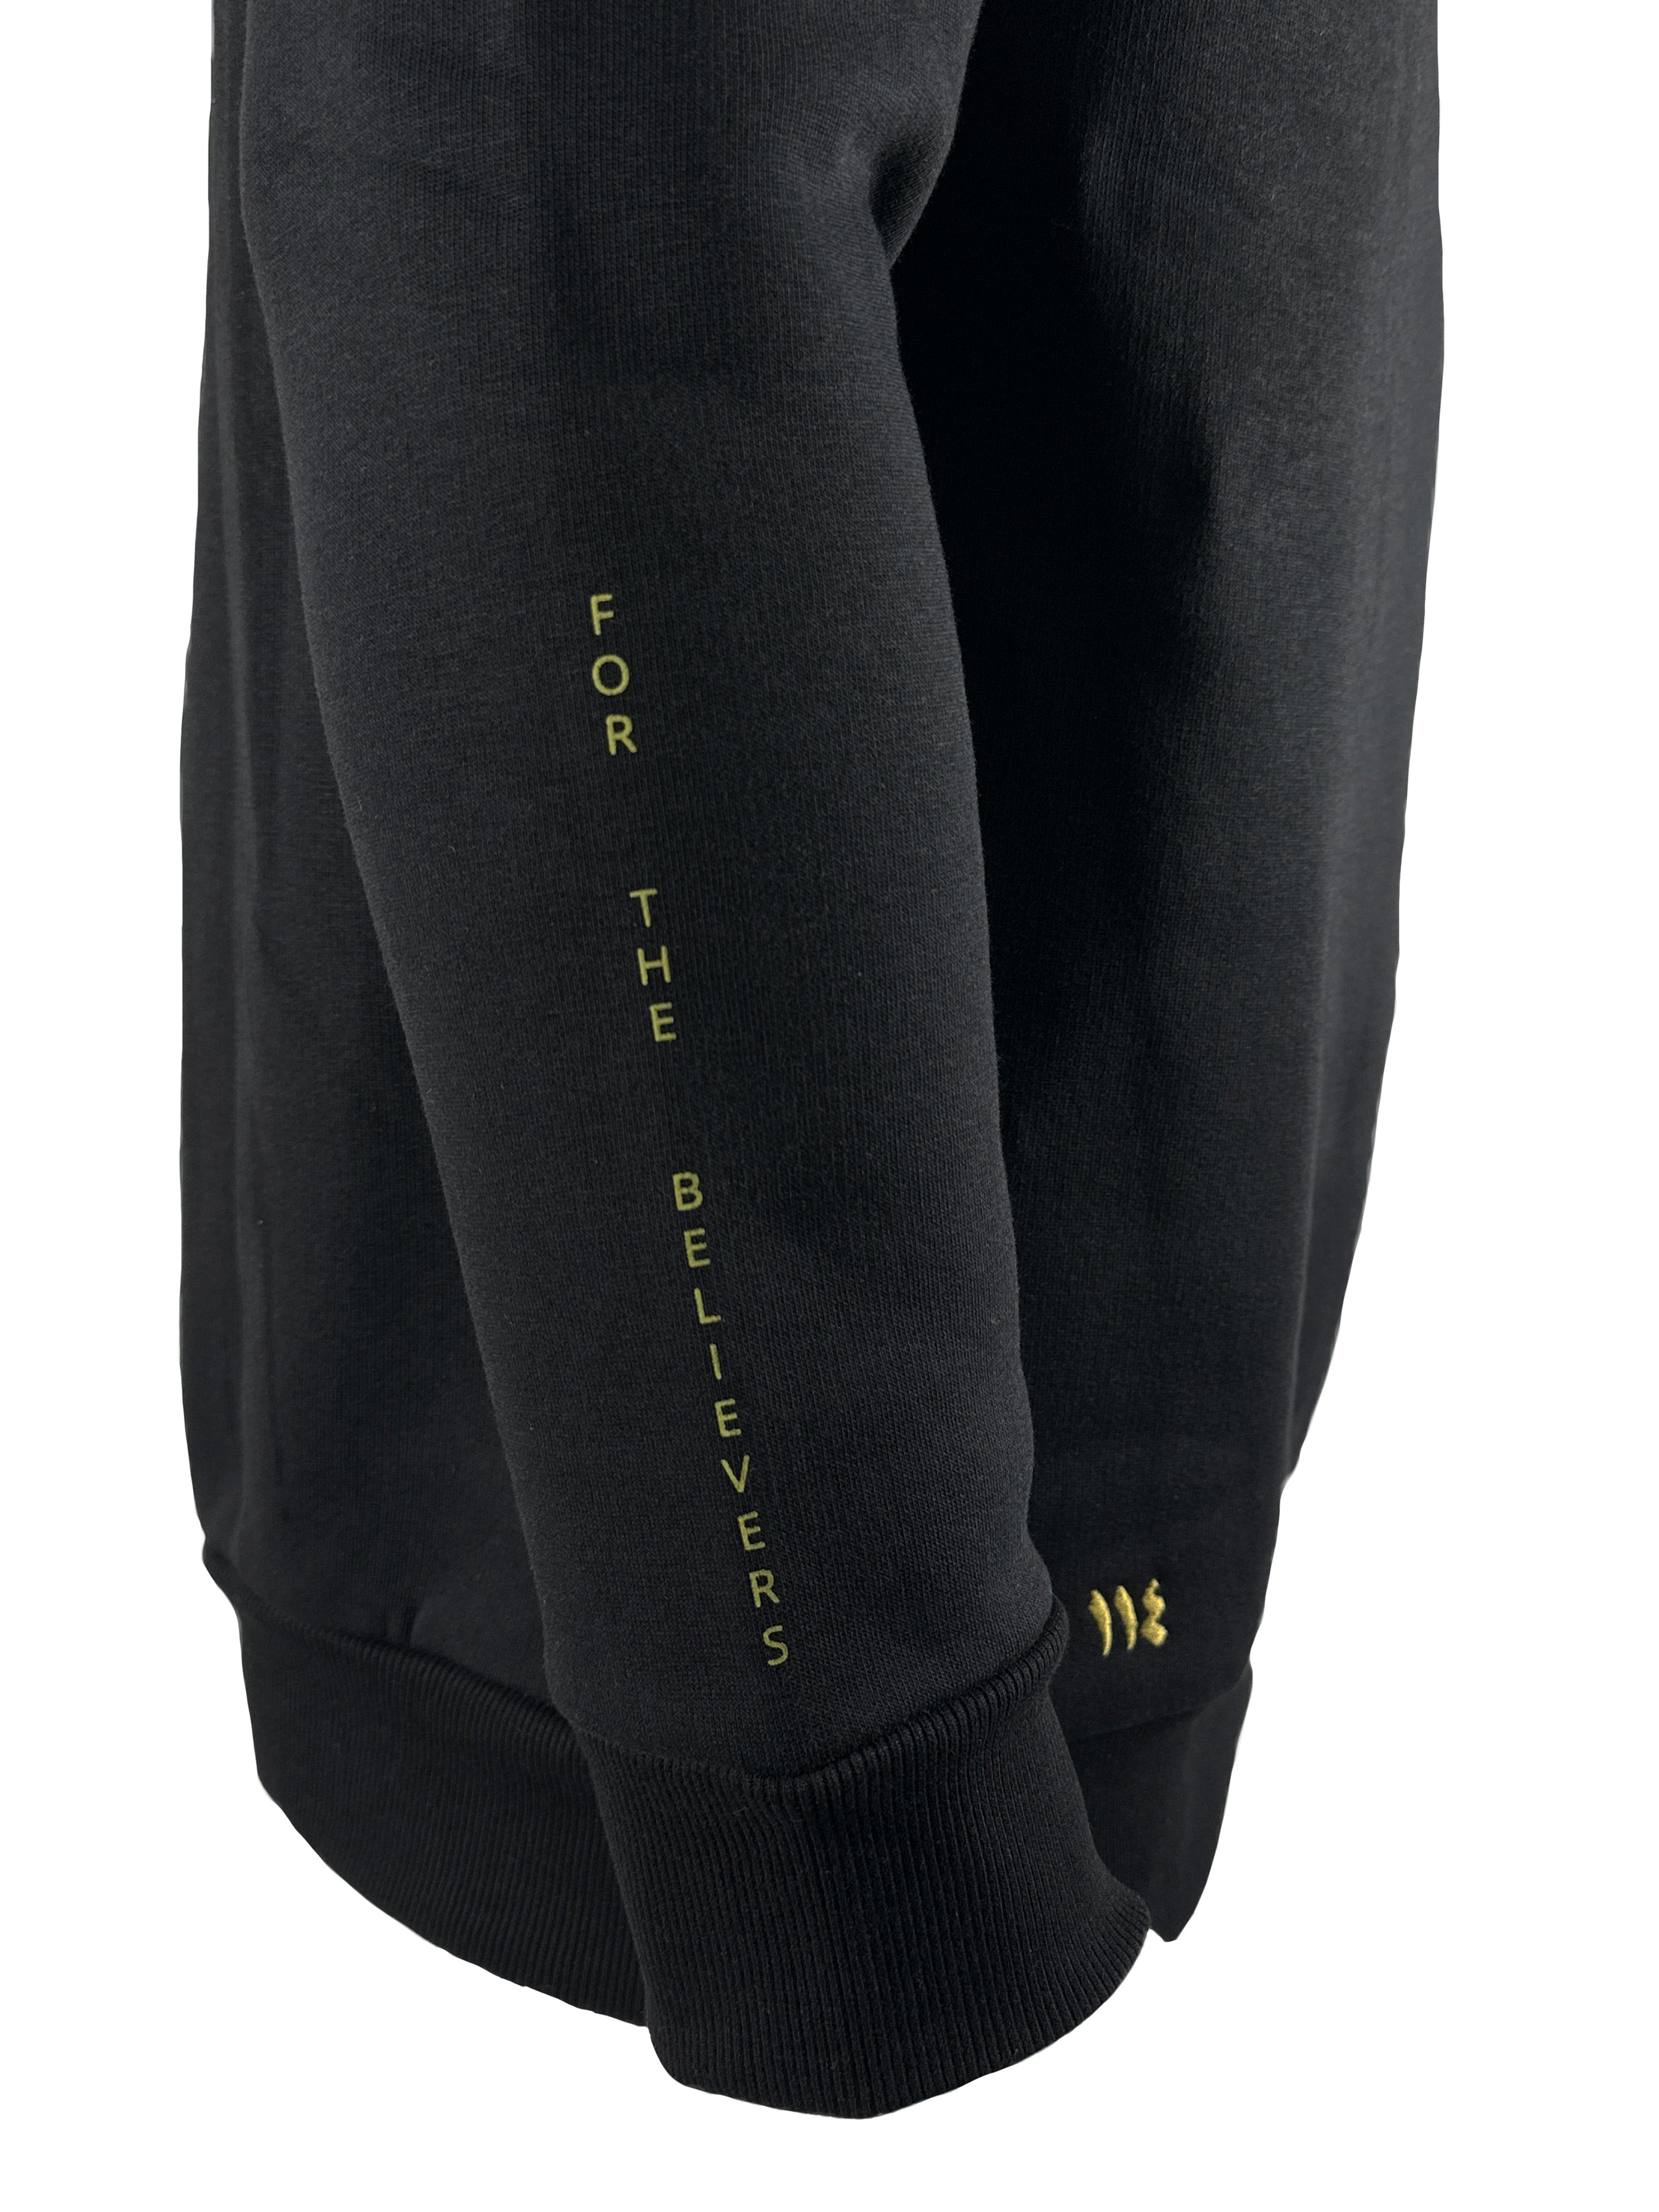 Tokyo Premium black Arabic sweatshirt - One fourteen apparel